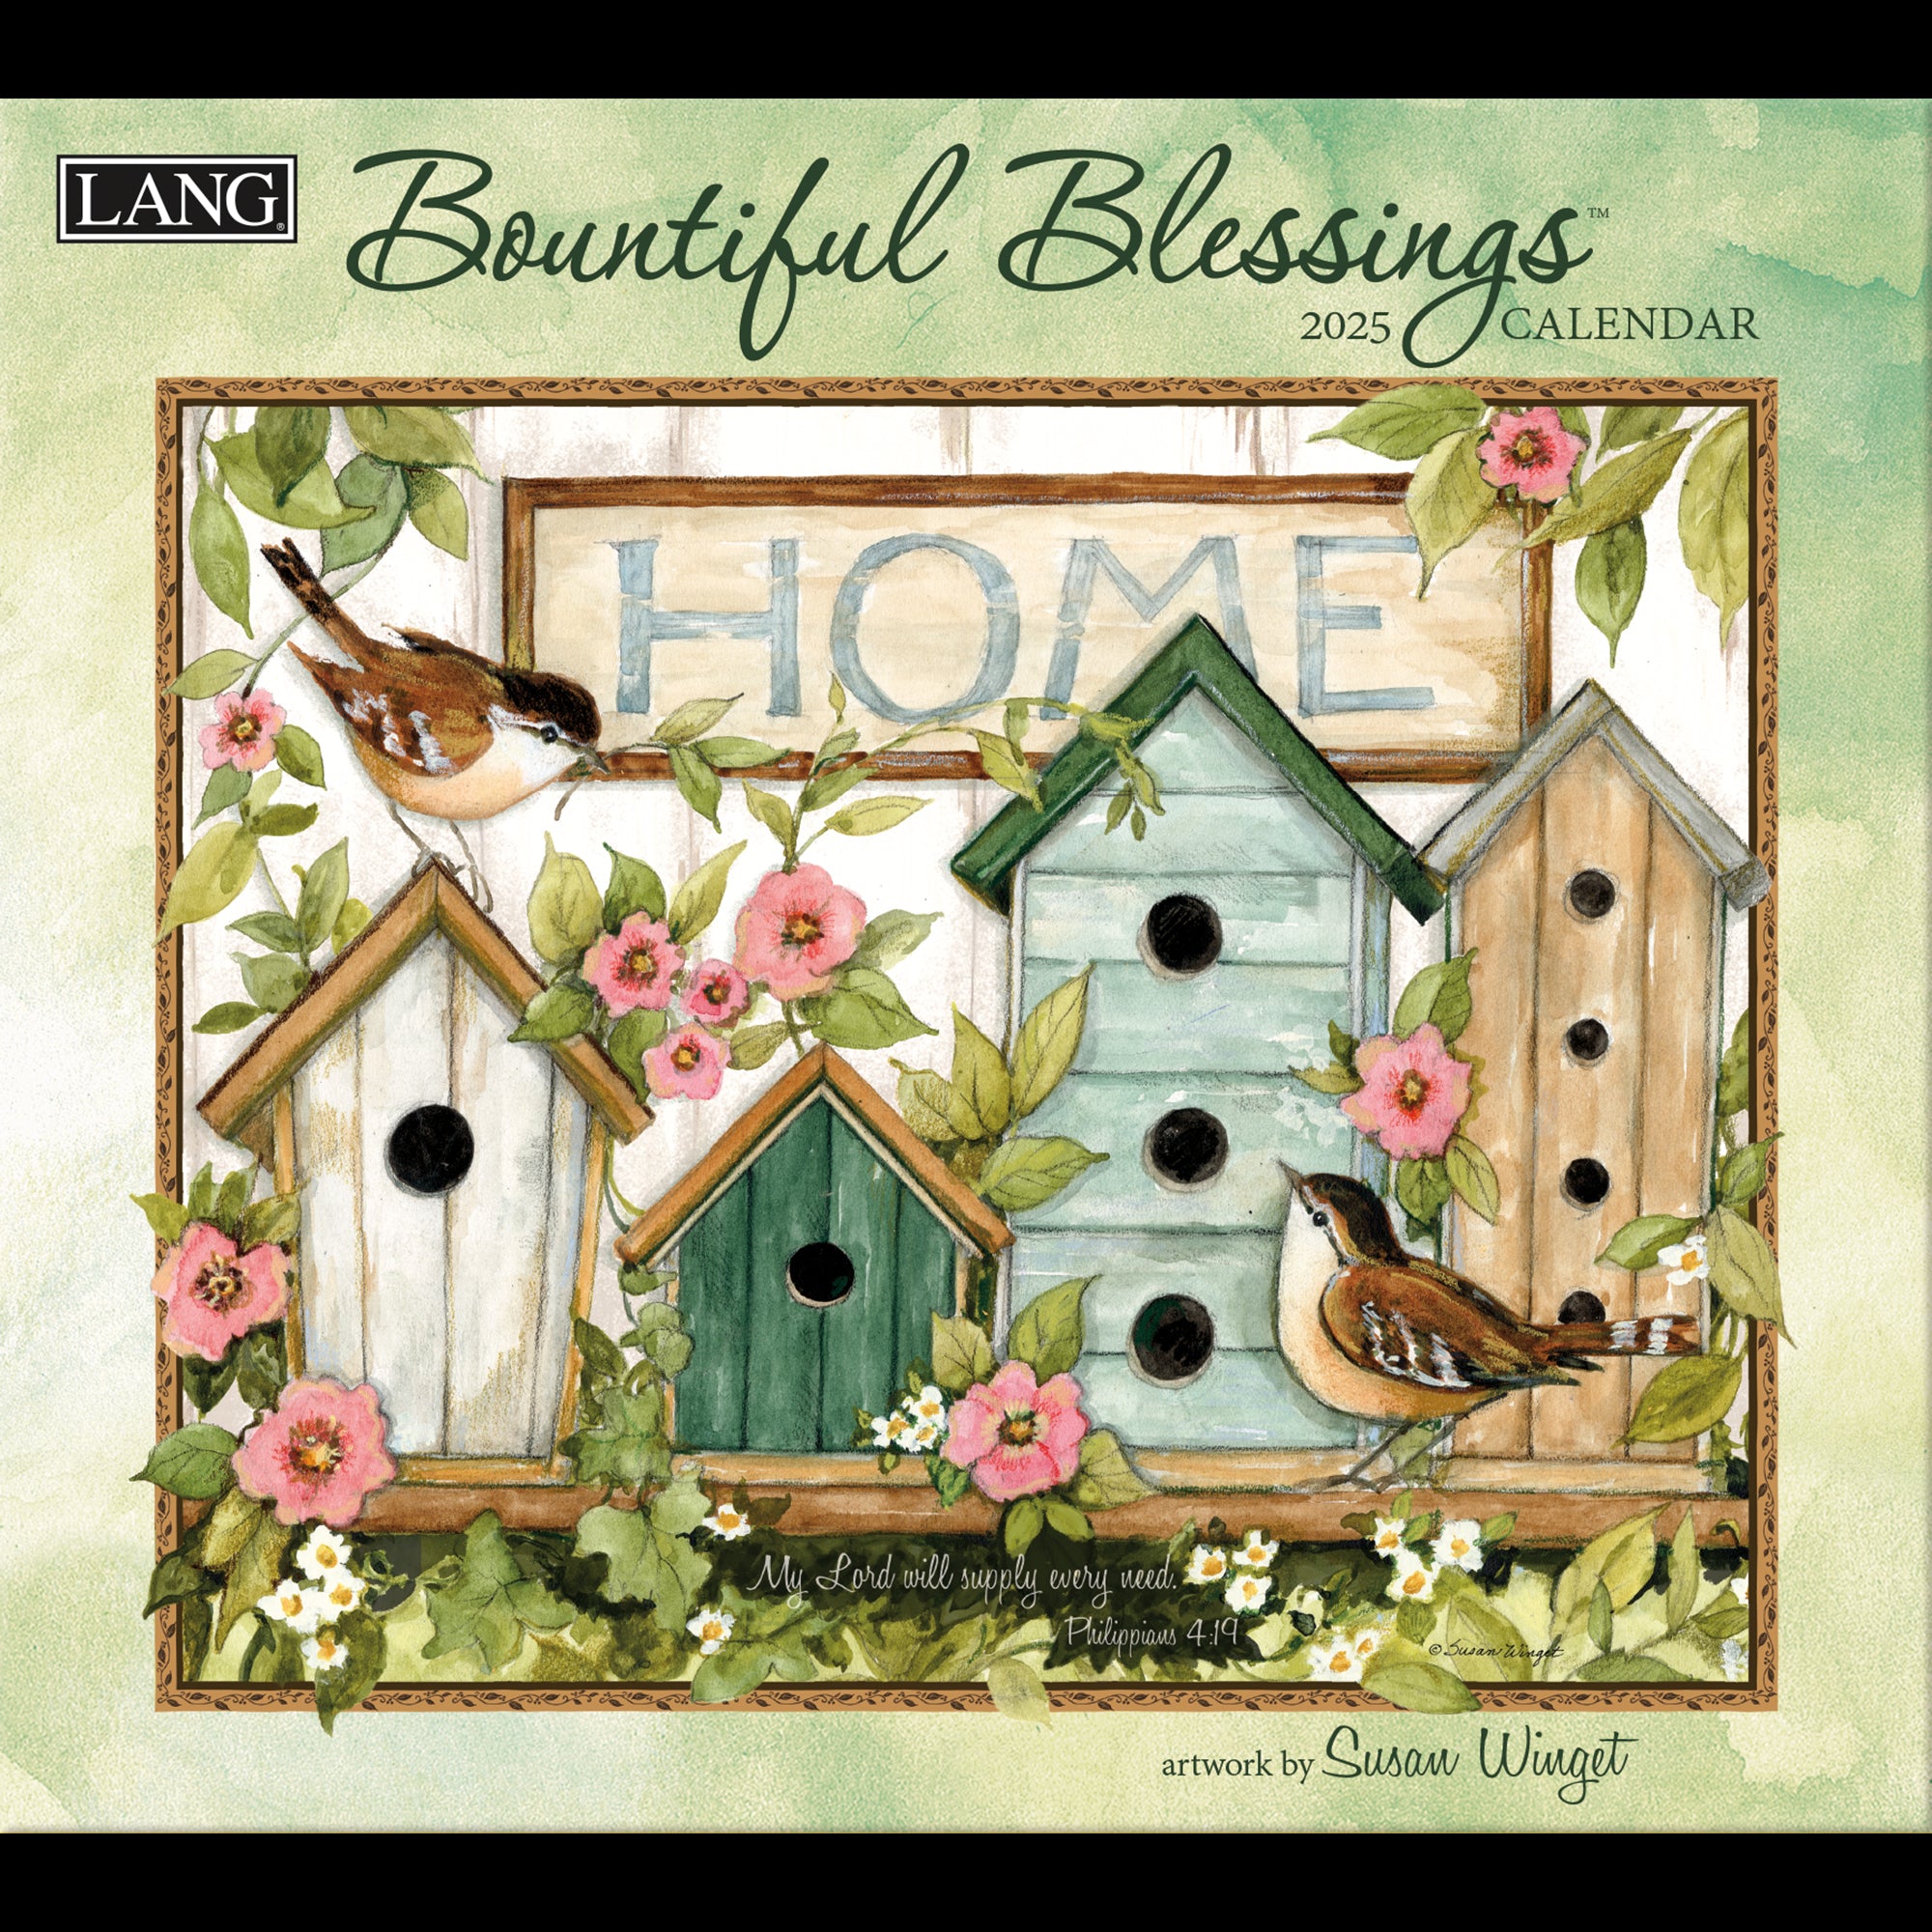 2025 Bountiful Blessings By Susan Winget - LANG Deluxe Wall Calendar